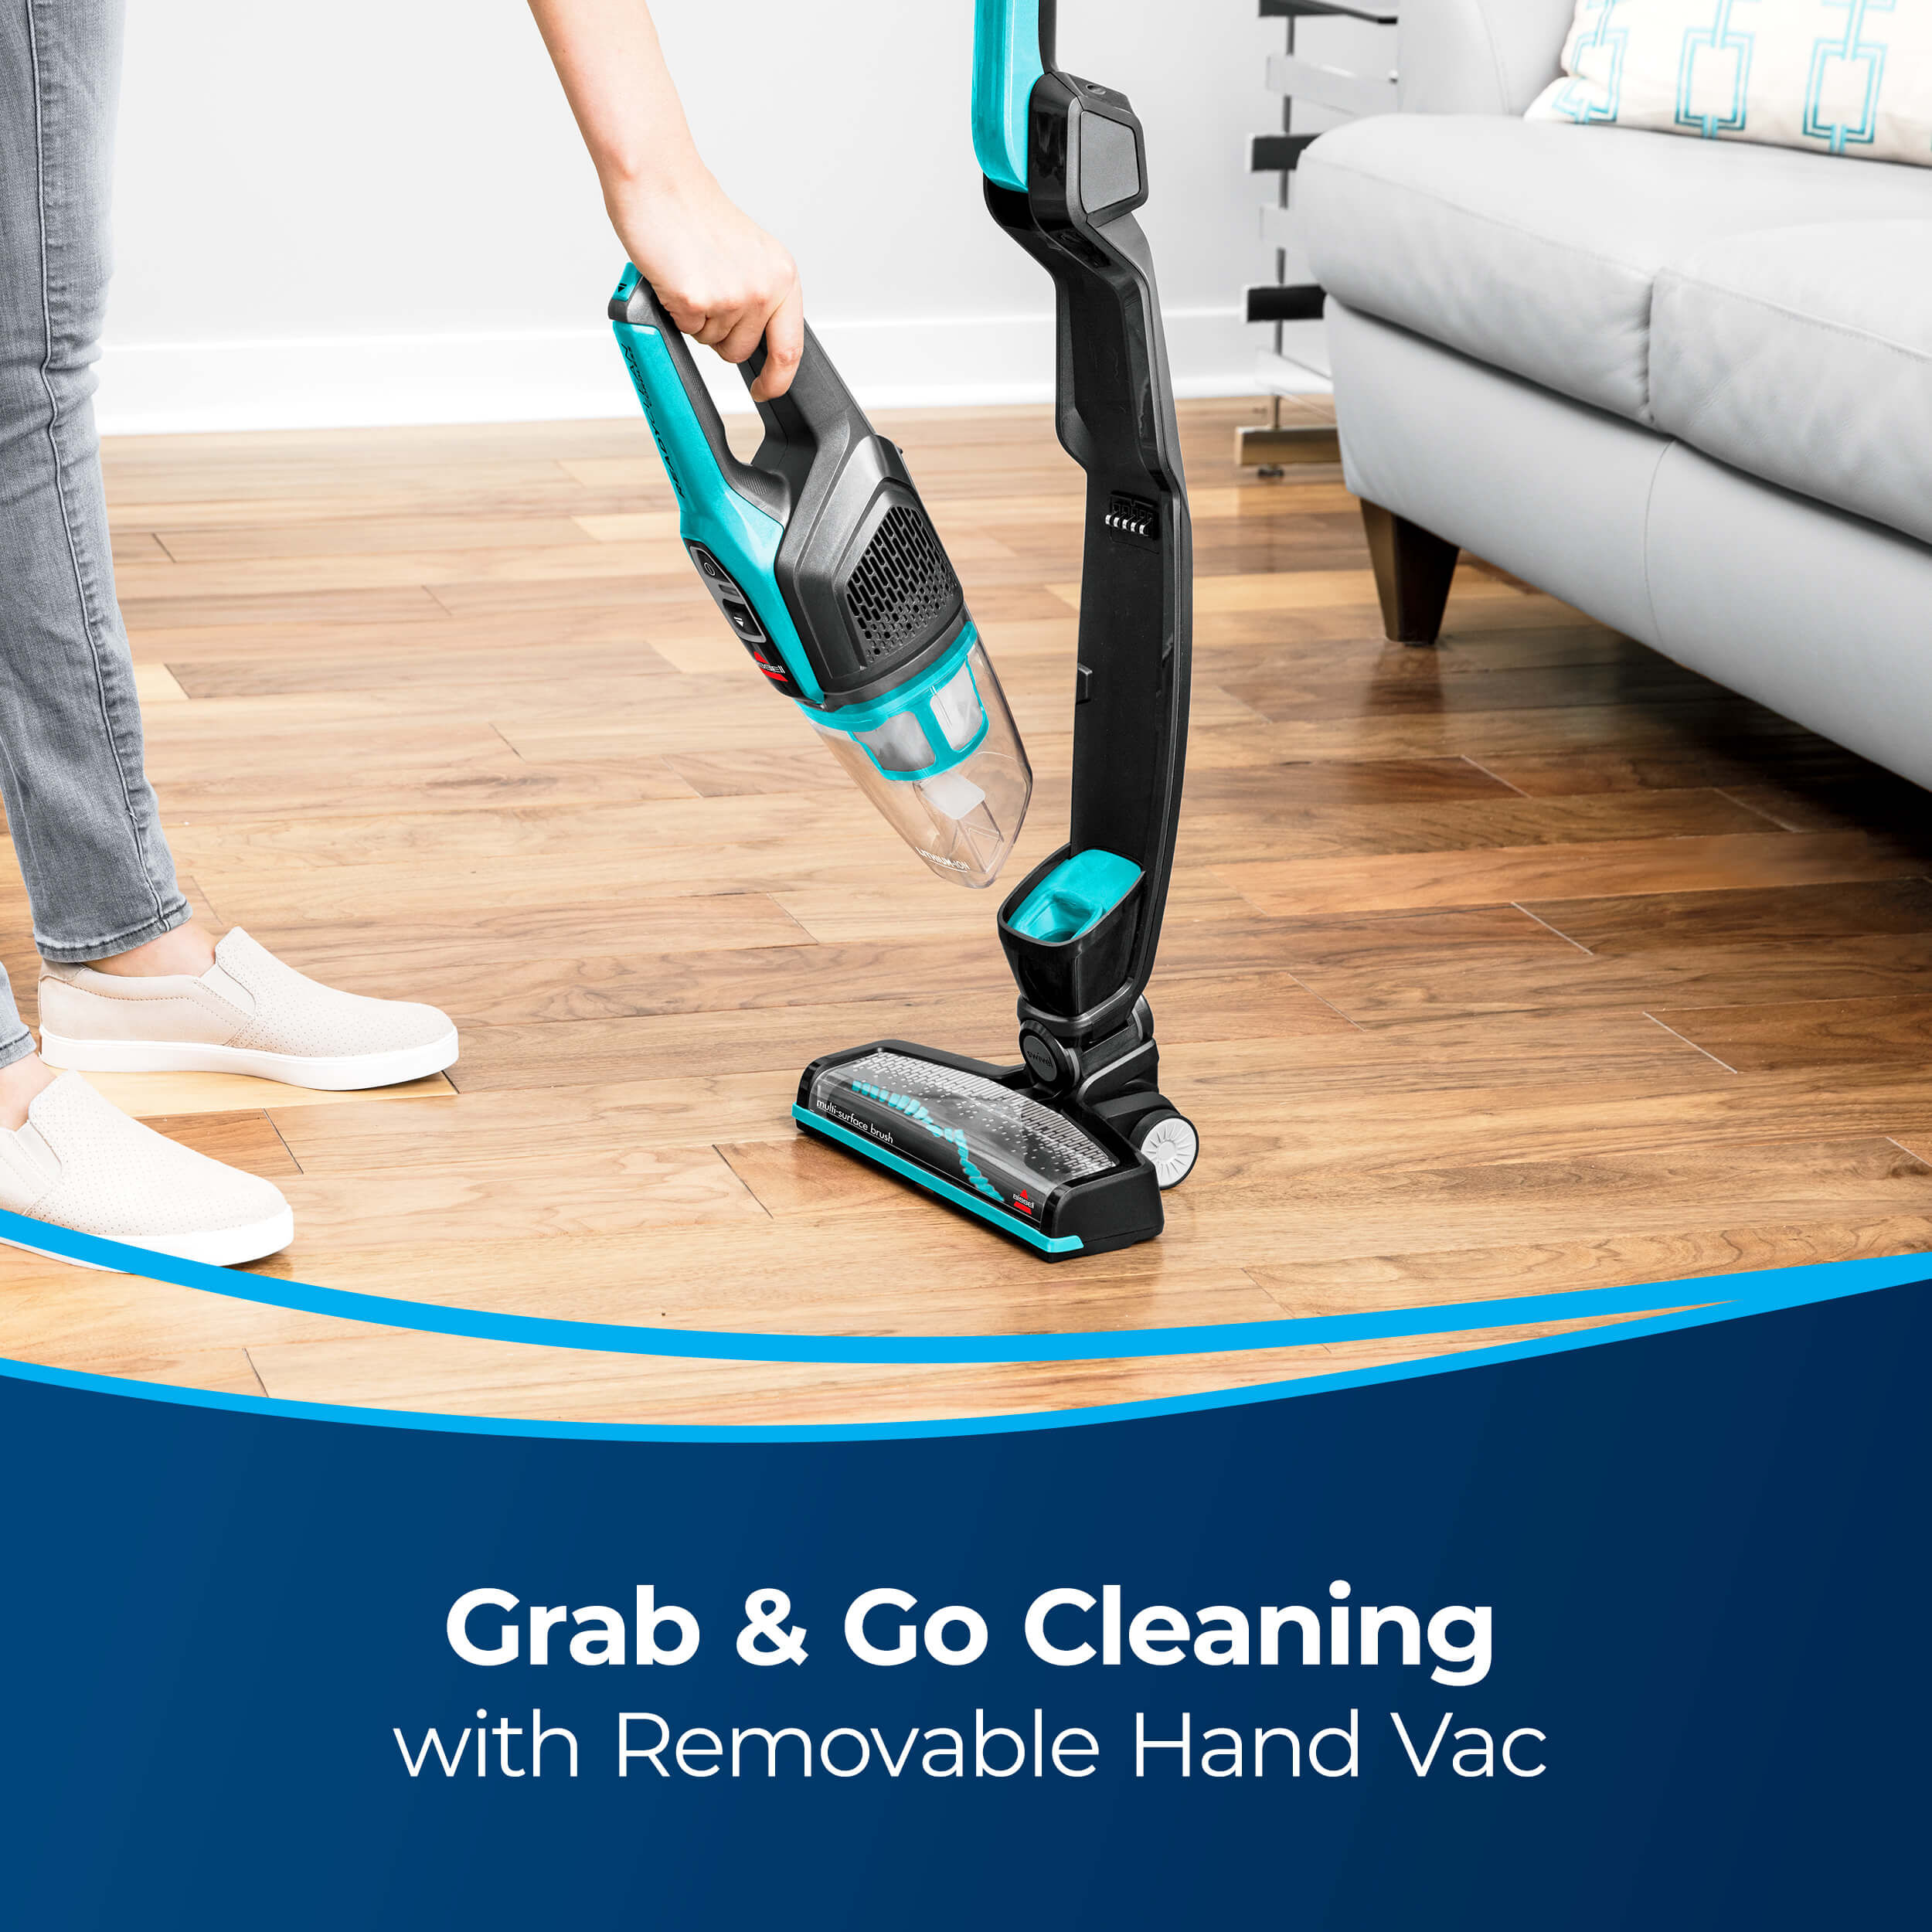 Swivel Floor Carpet Sweeper Lightweight Cordless Vacuum Cleaner Cleaning Cordles 